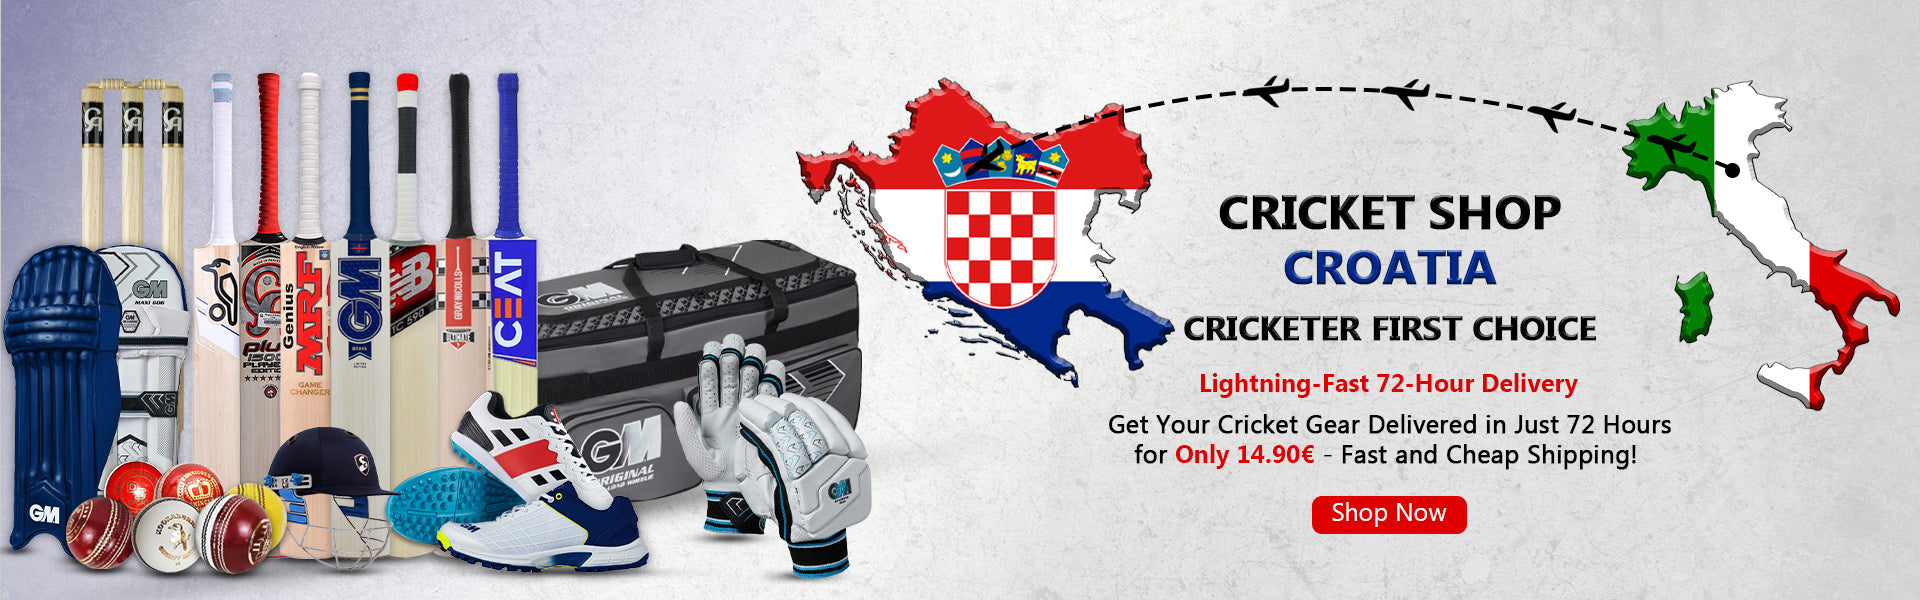 Cricket Shop Croatia | Cricketer first Choice